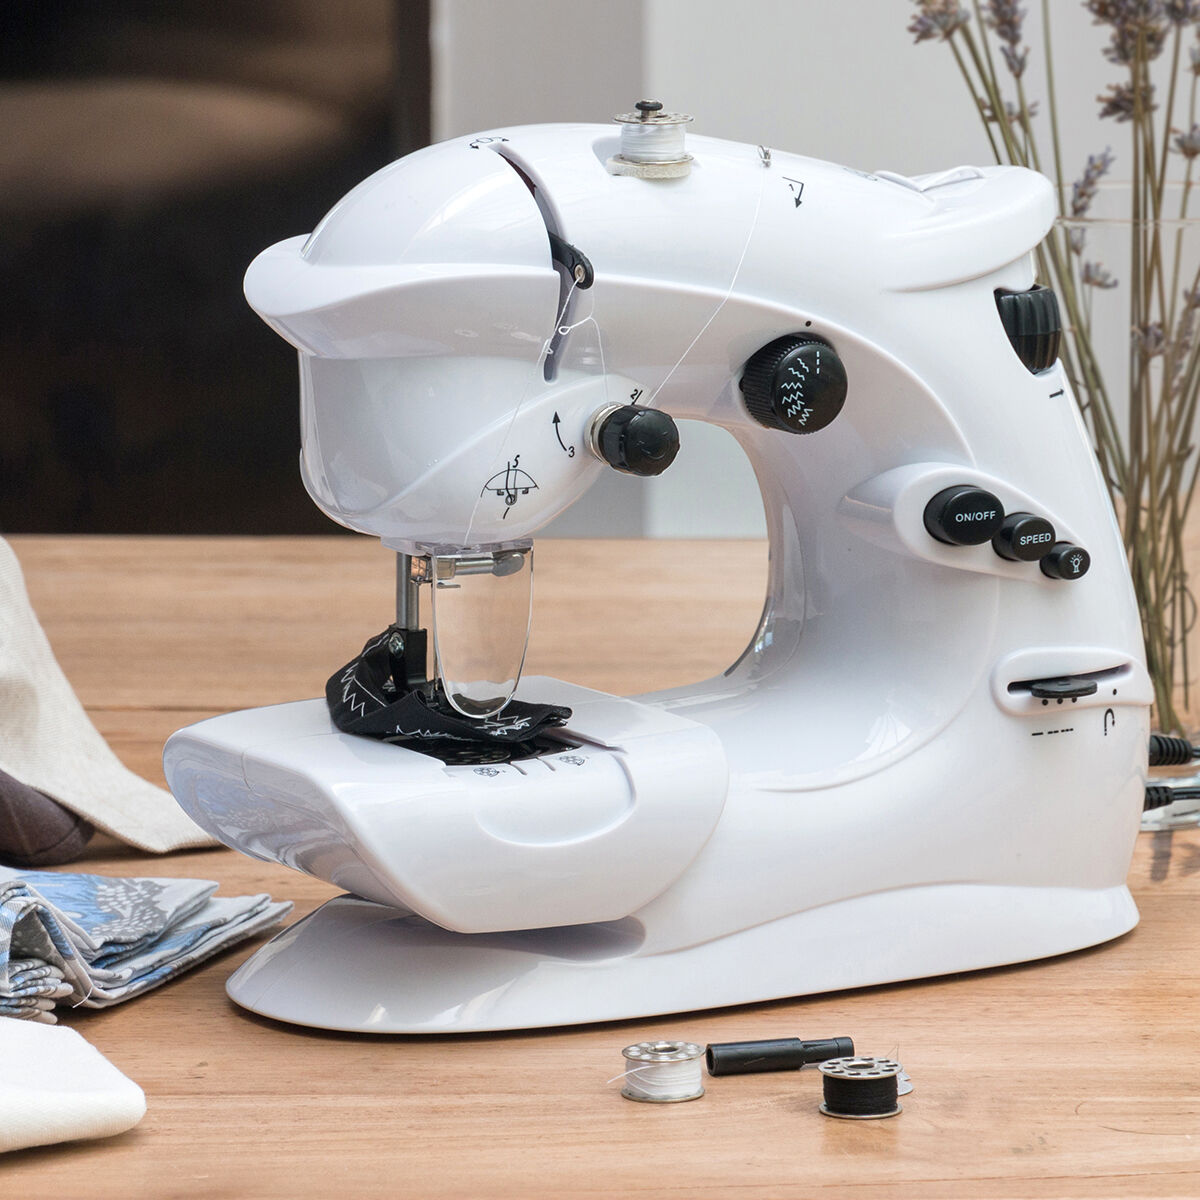 Sewing Machine Sewinne InnovaGoods